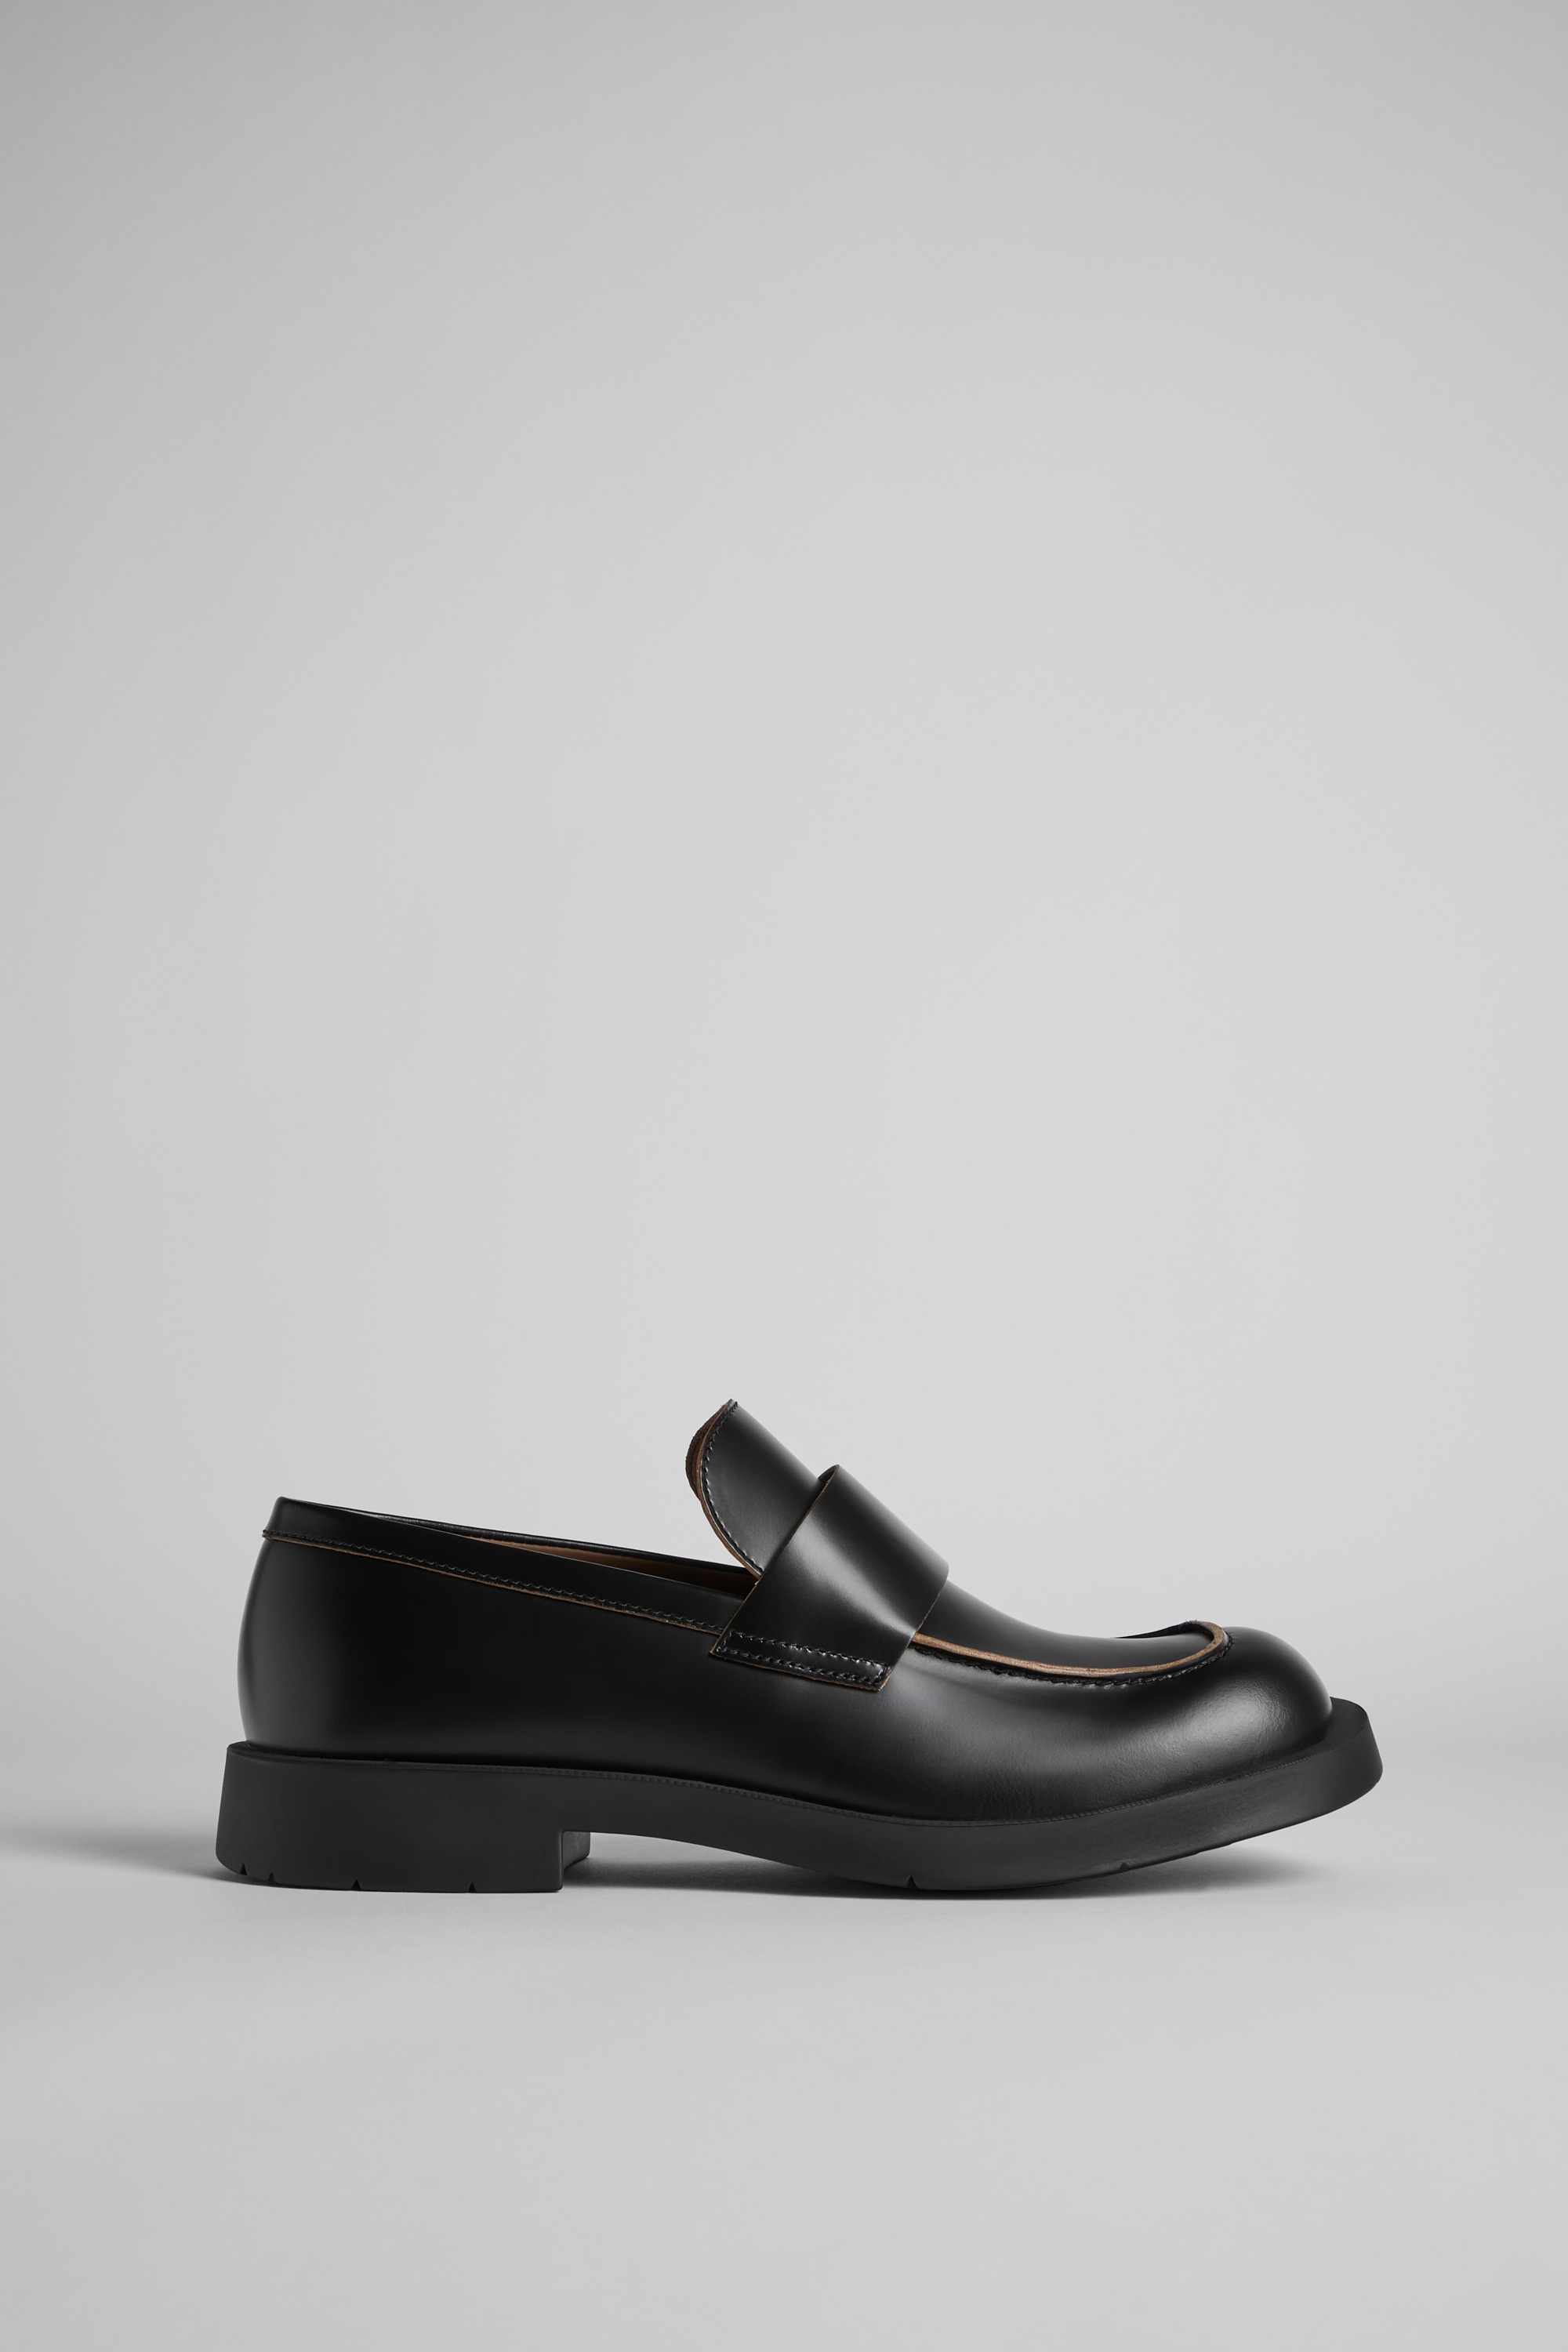 Neuman Black Formal Shoes for Men - Autumn/Winter collection 